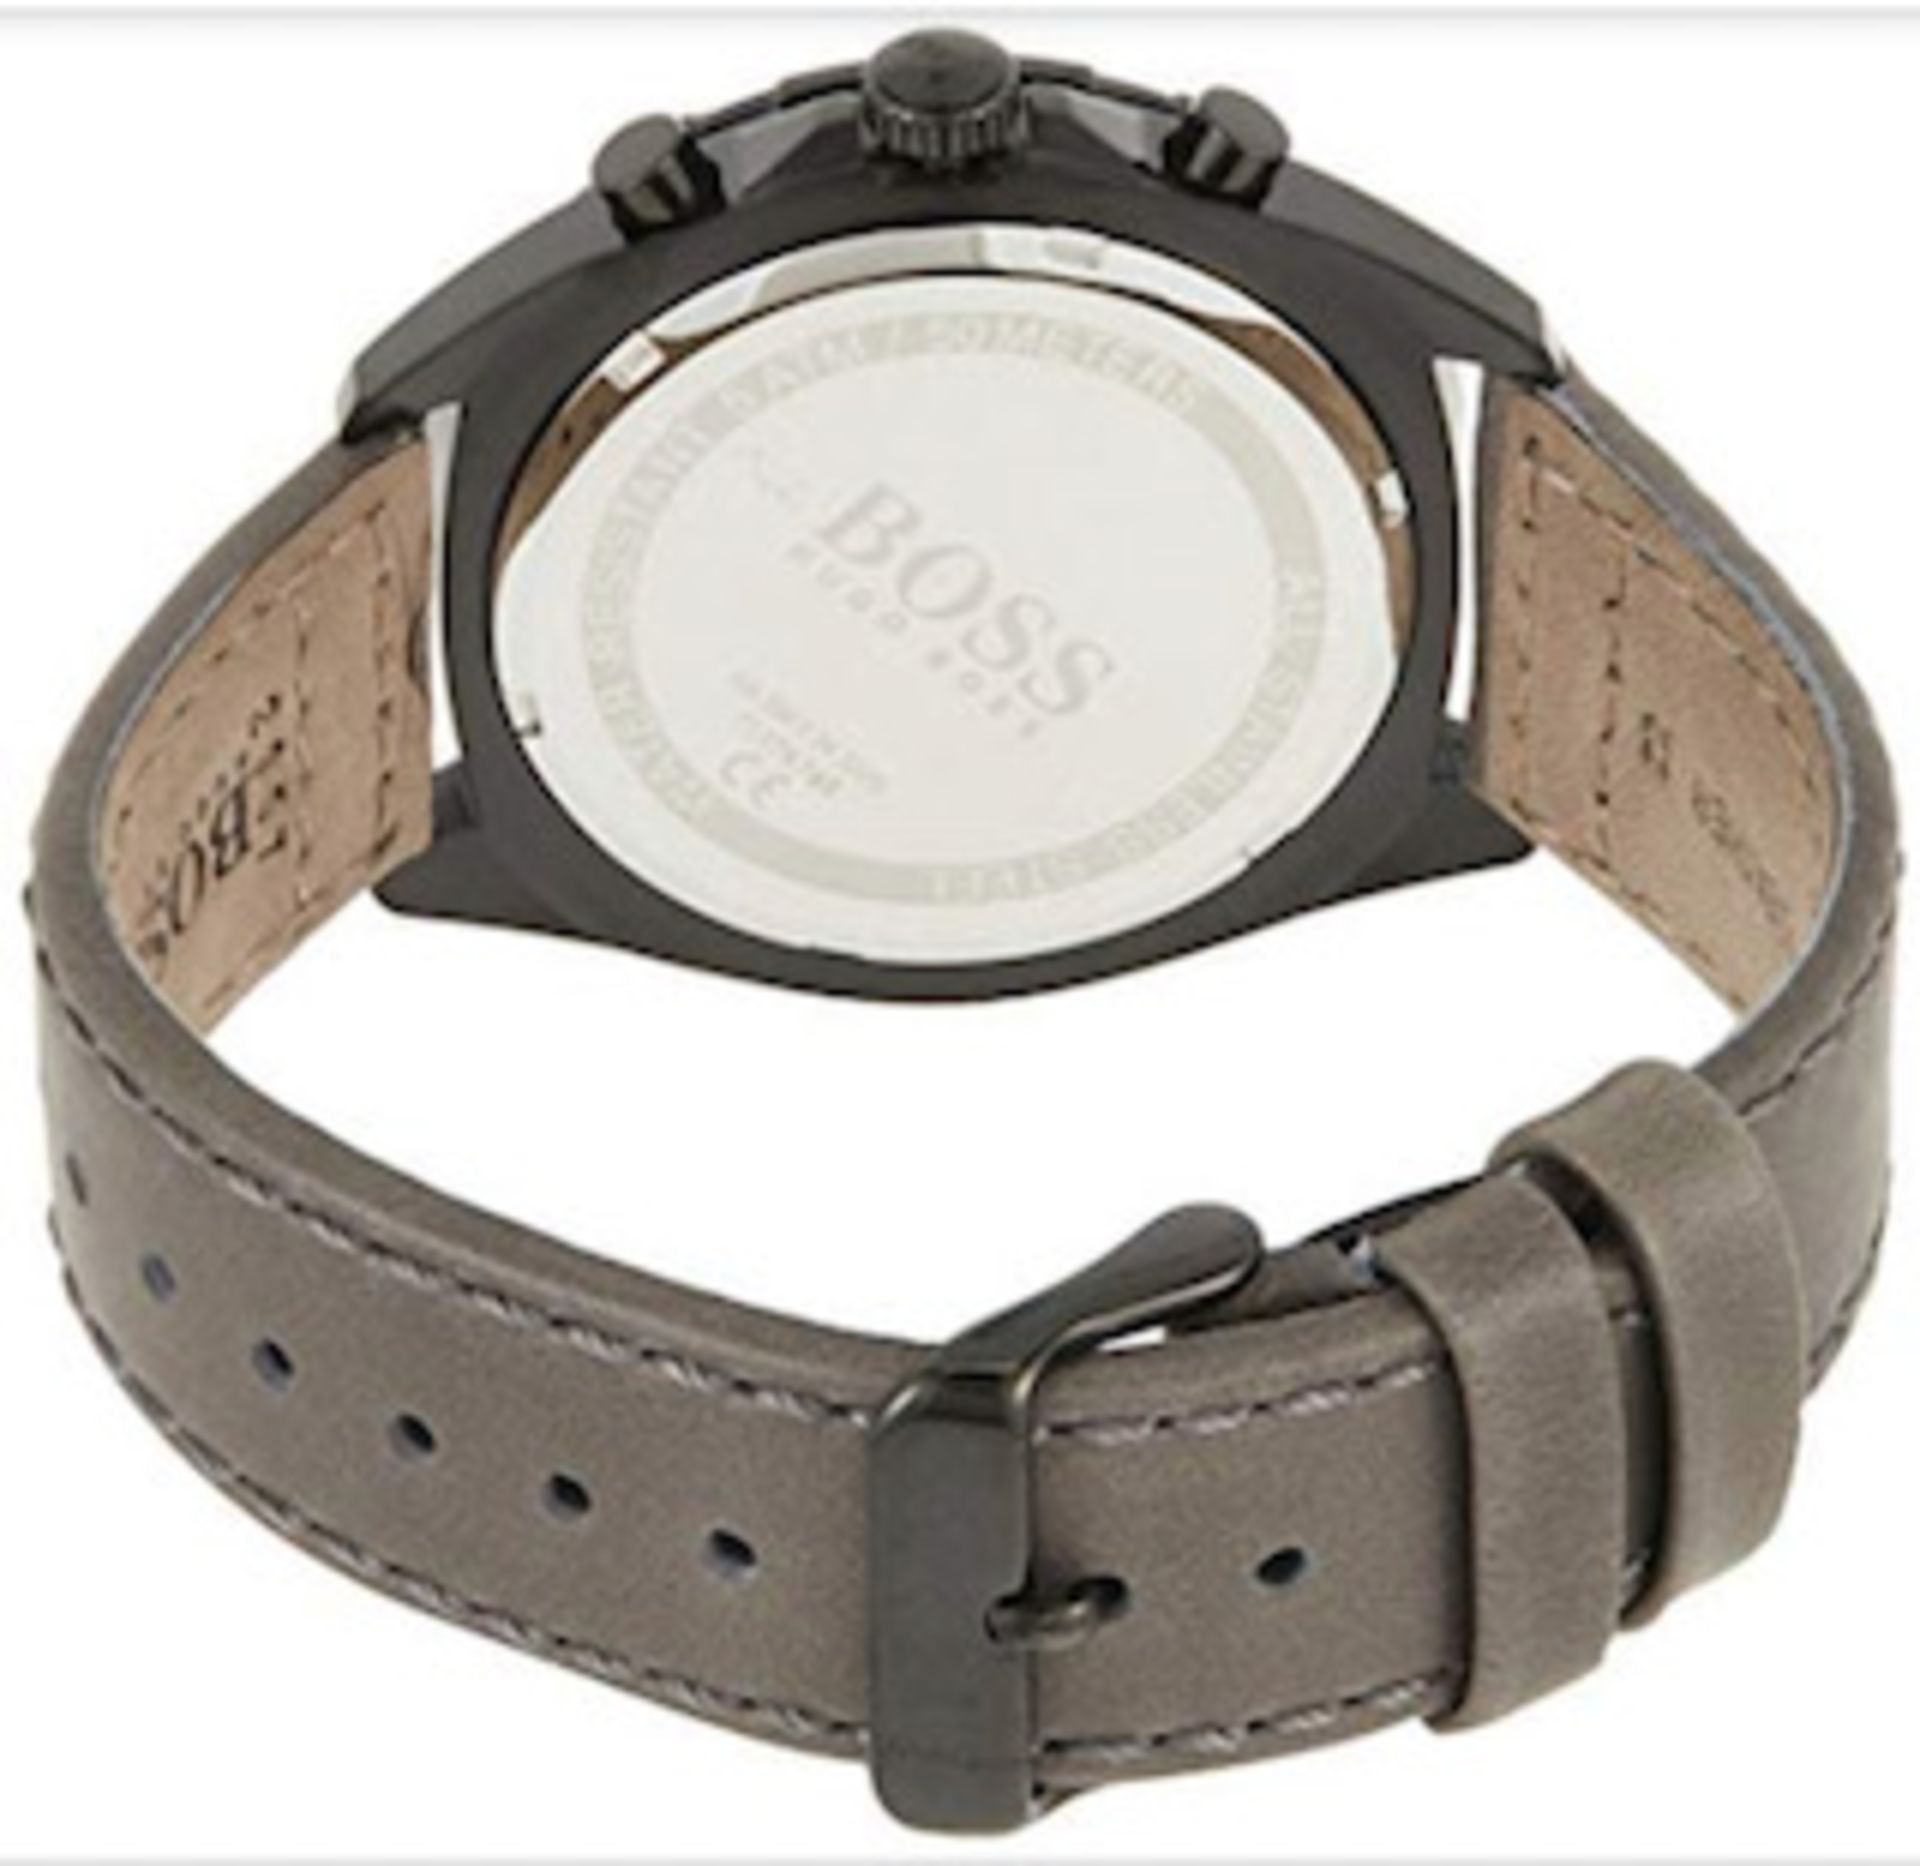 Hugo Boss 1513679 Men's Intensity Grey Leather Strap Chronograph Watch - Image 4 of 5